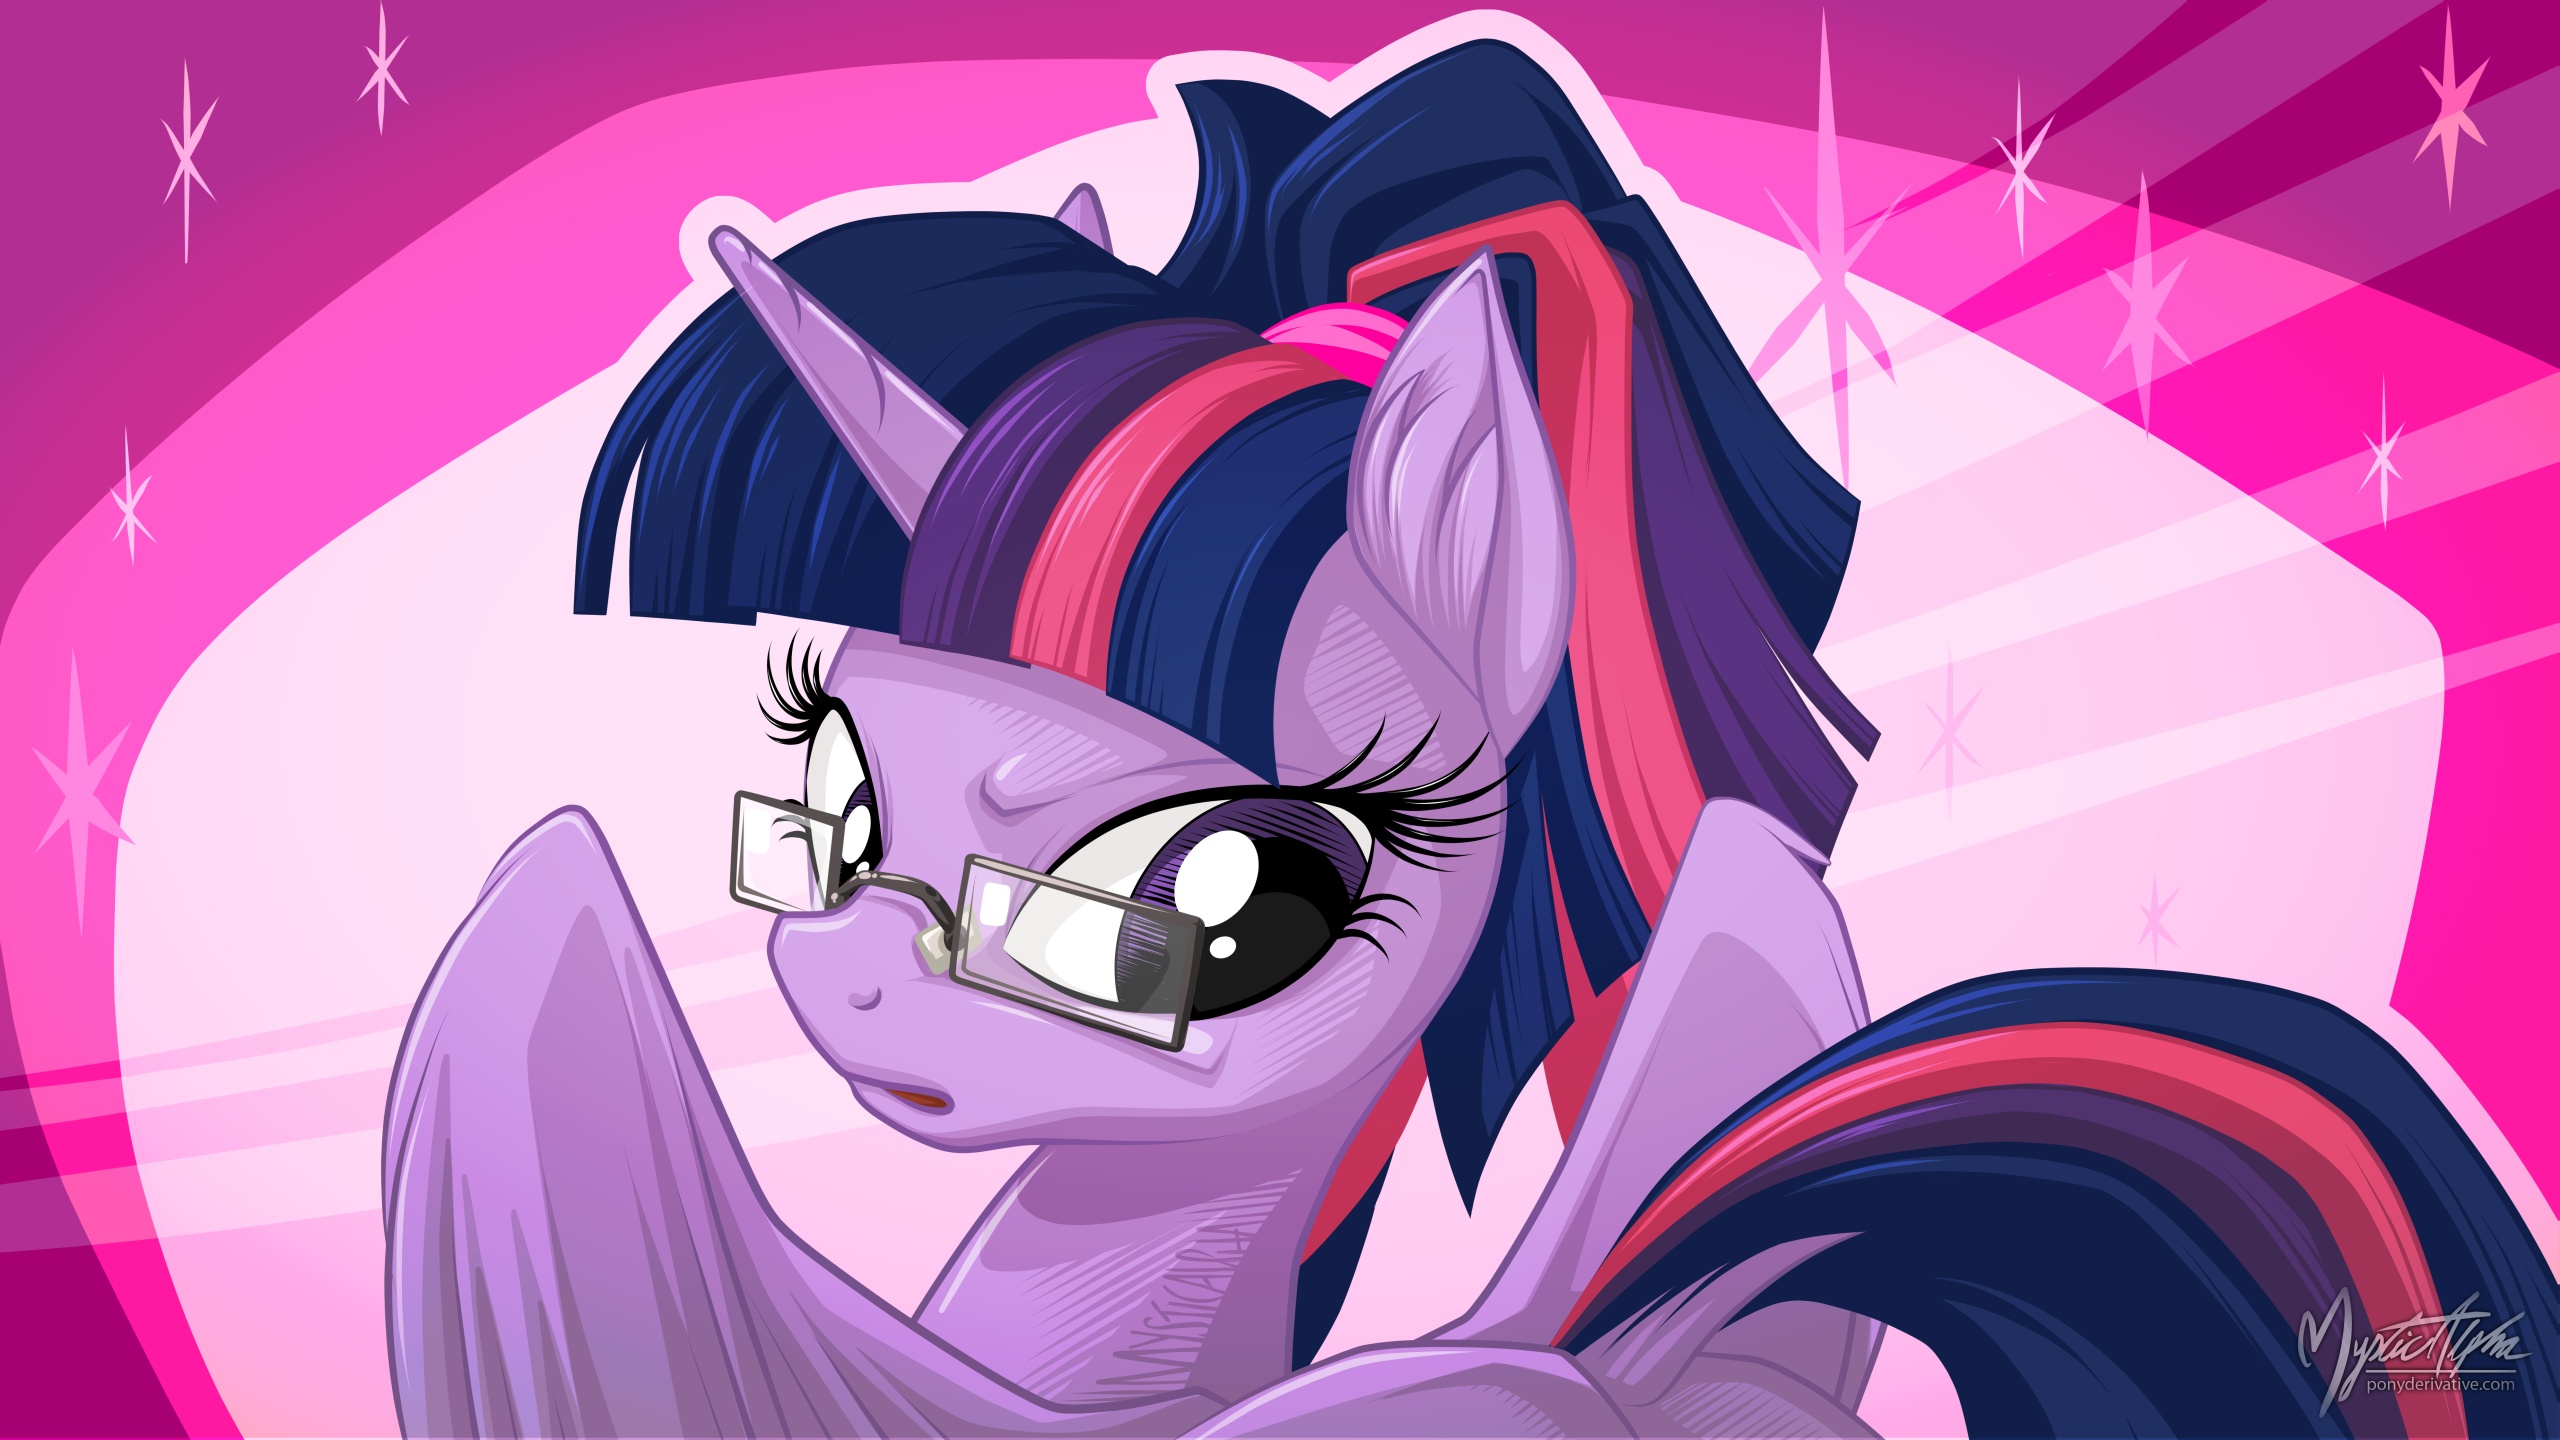 Twilight Sparkle - Ponytail and Glasses 16:9